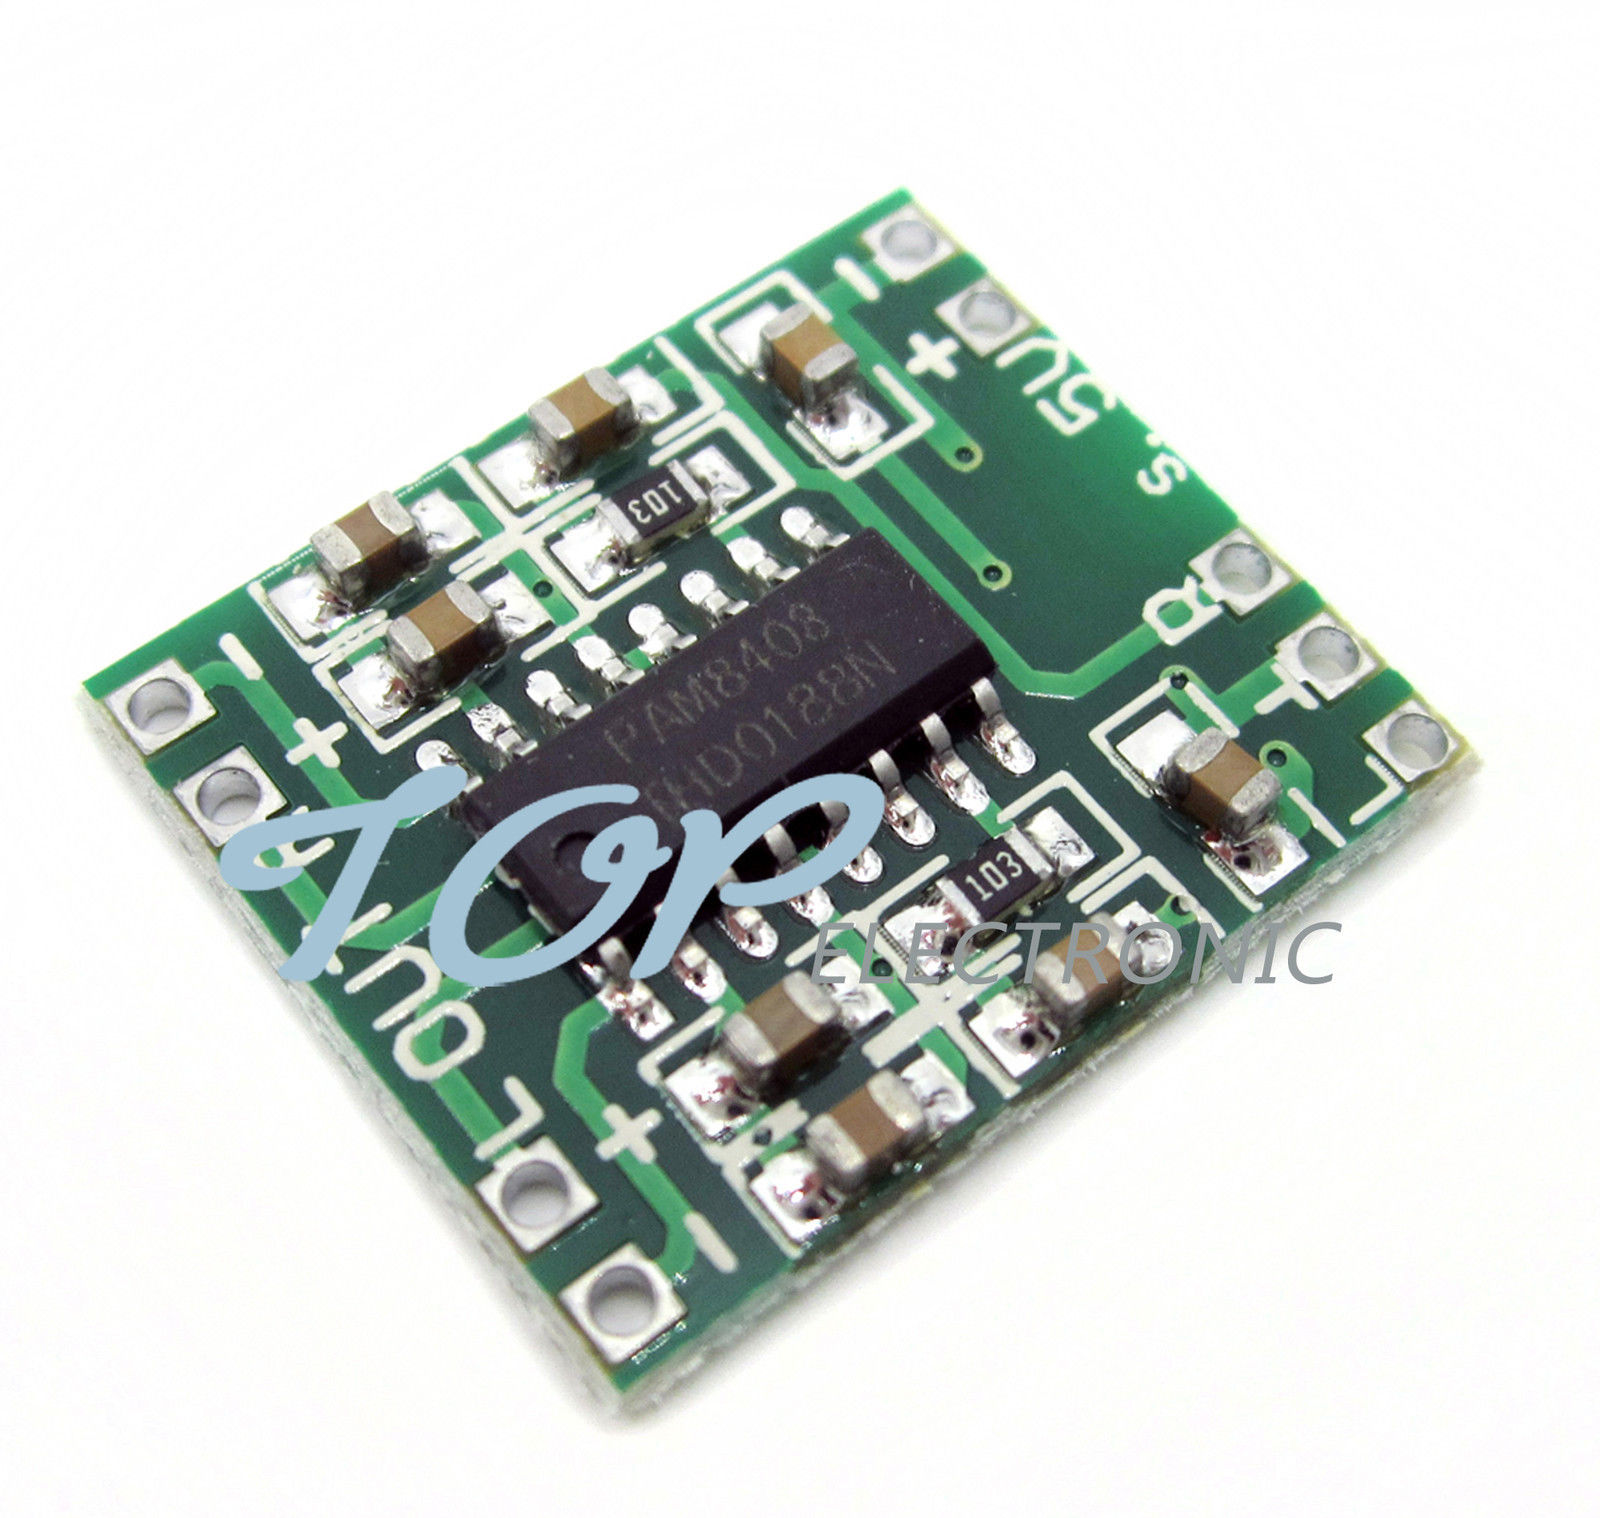 PAM8403 цифровой аудио усилитель мини  2х3W  питание 5V   (Arduino)